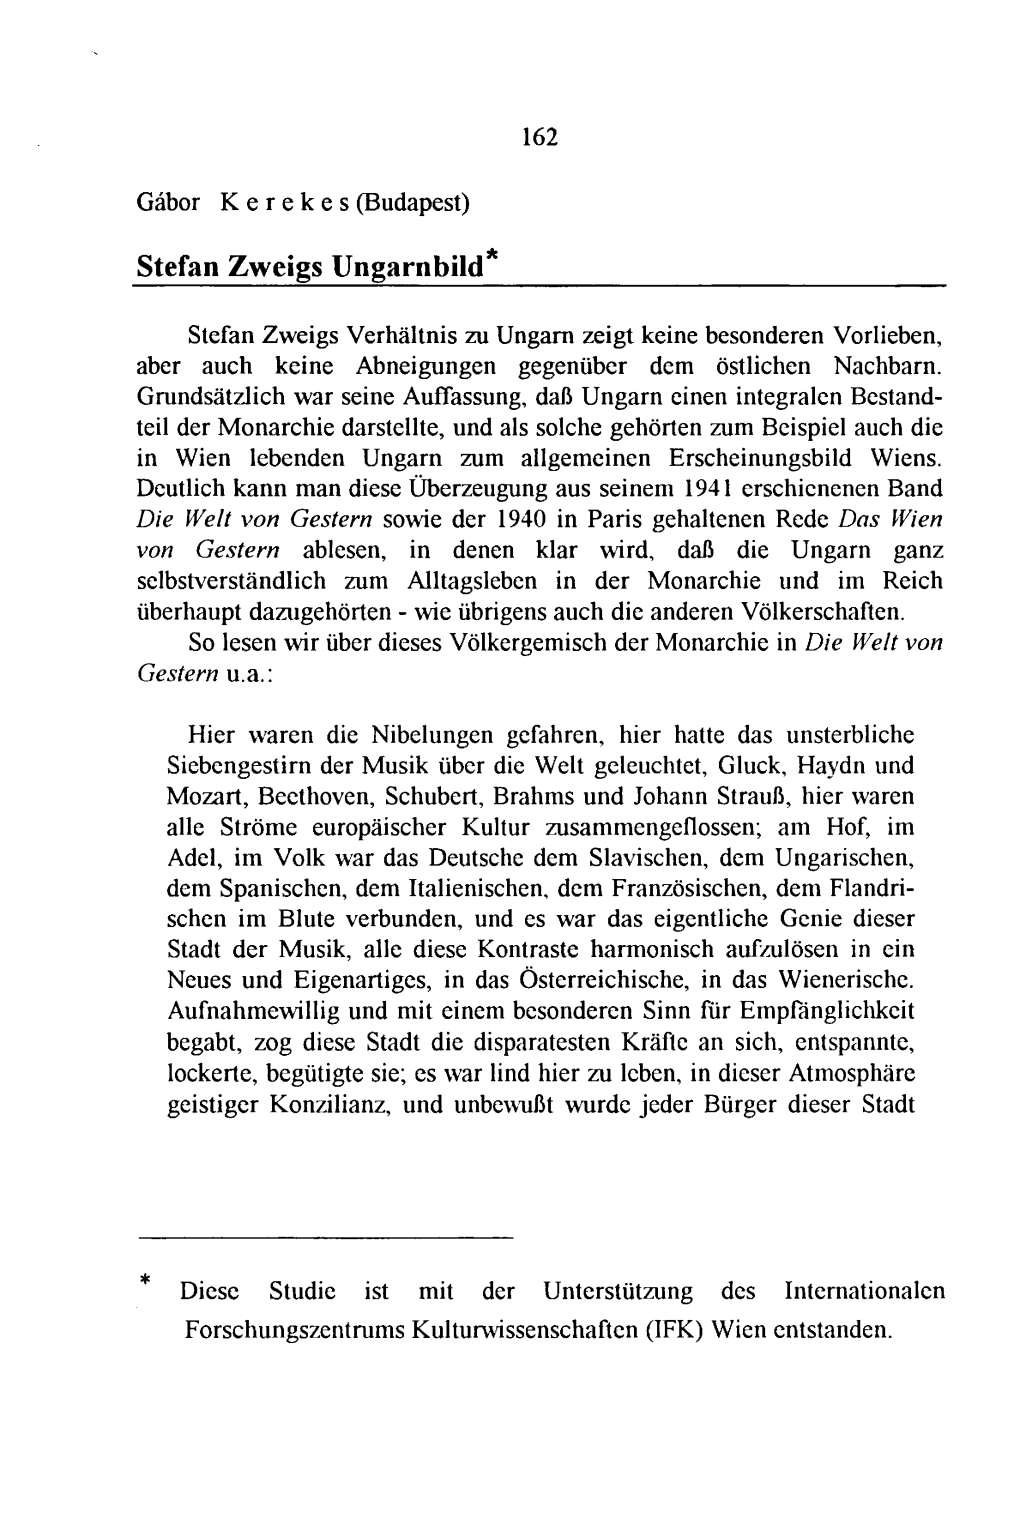 Berliner Beiträge Zur Hungarologie 8. (Berlin-Budapest, 1995)